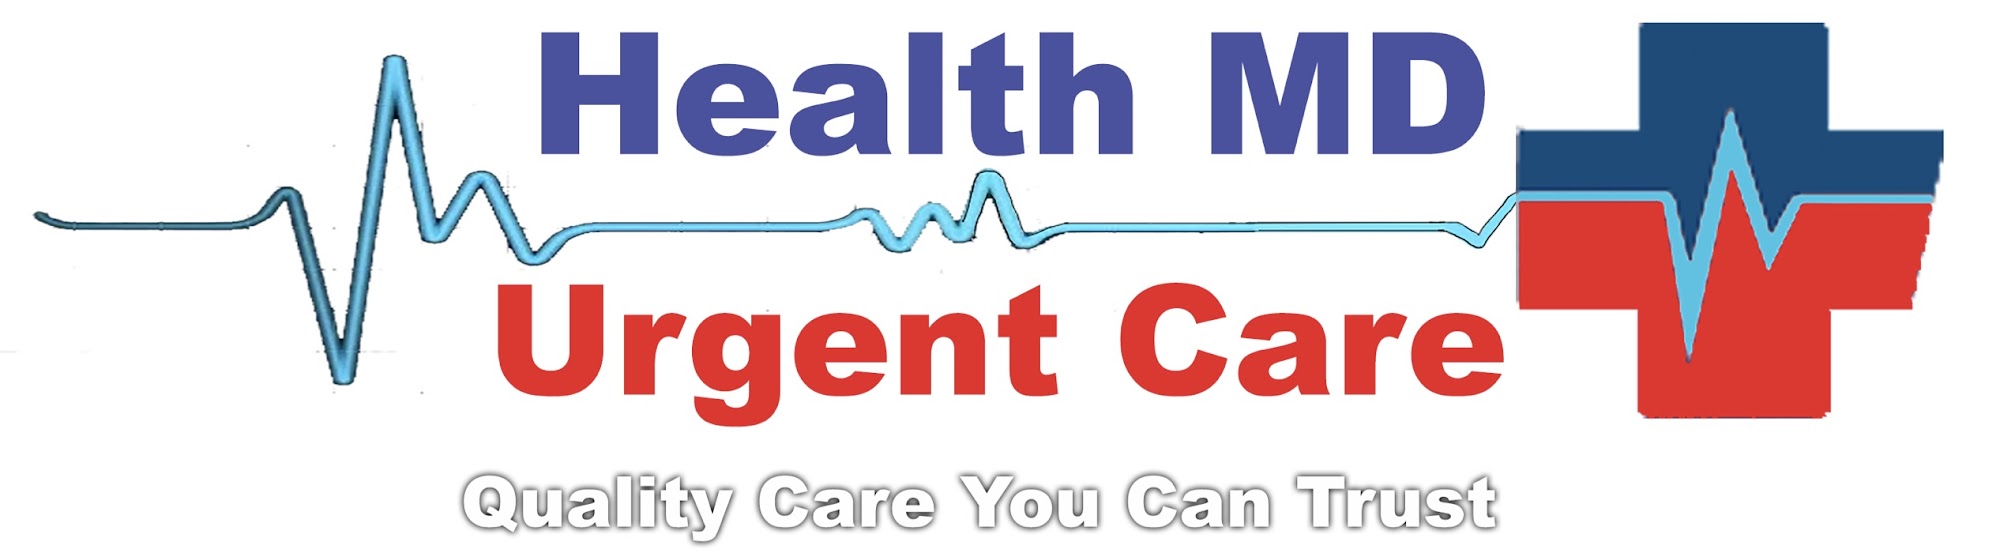 Health MD Urgent Care